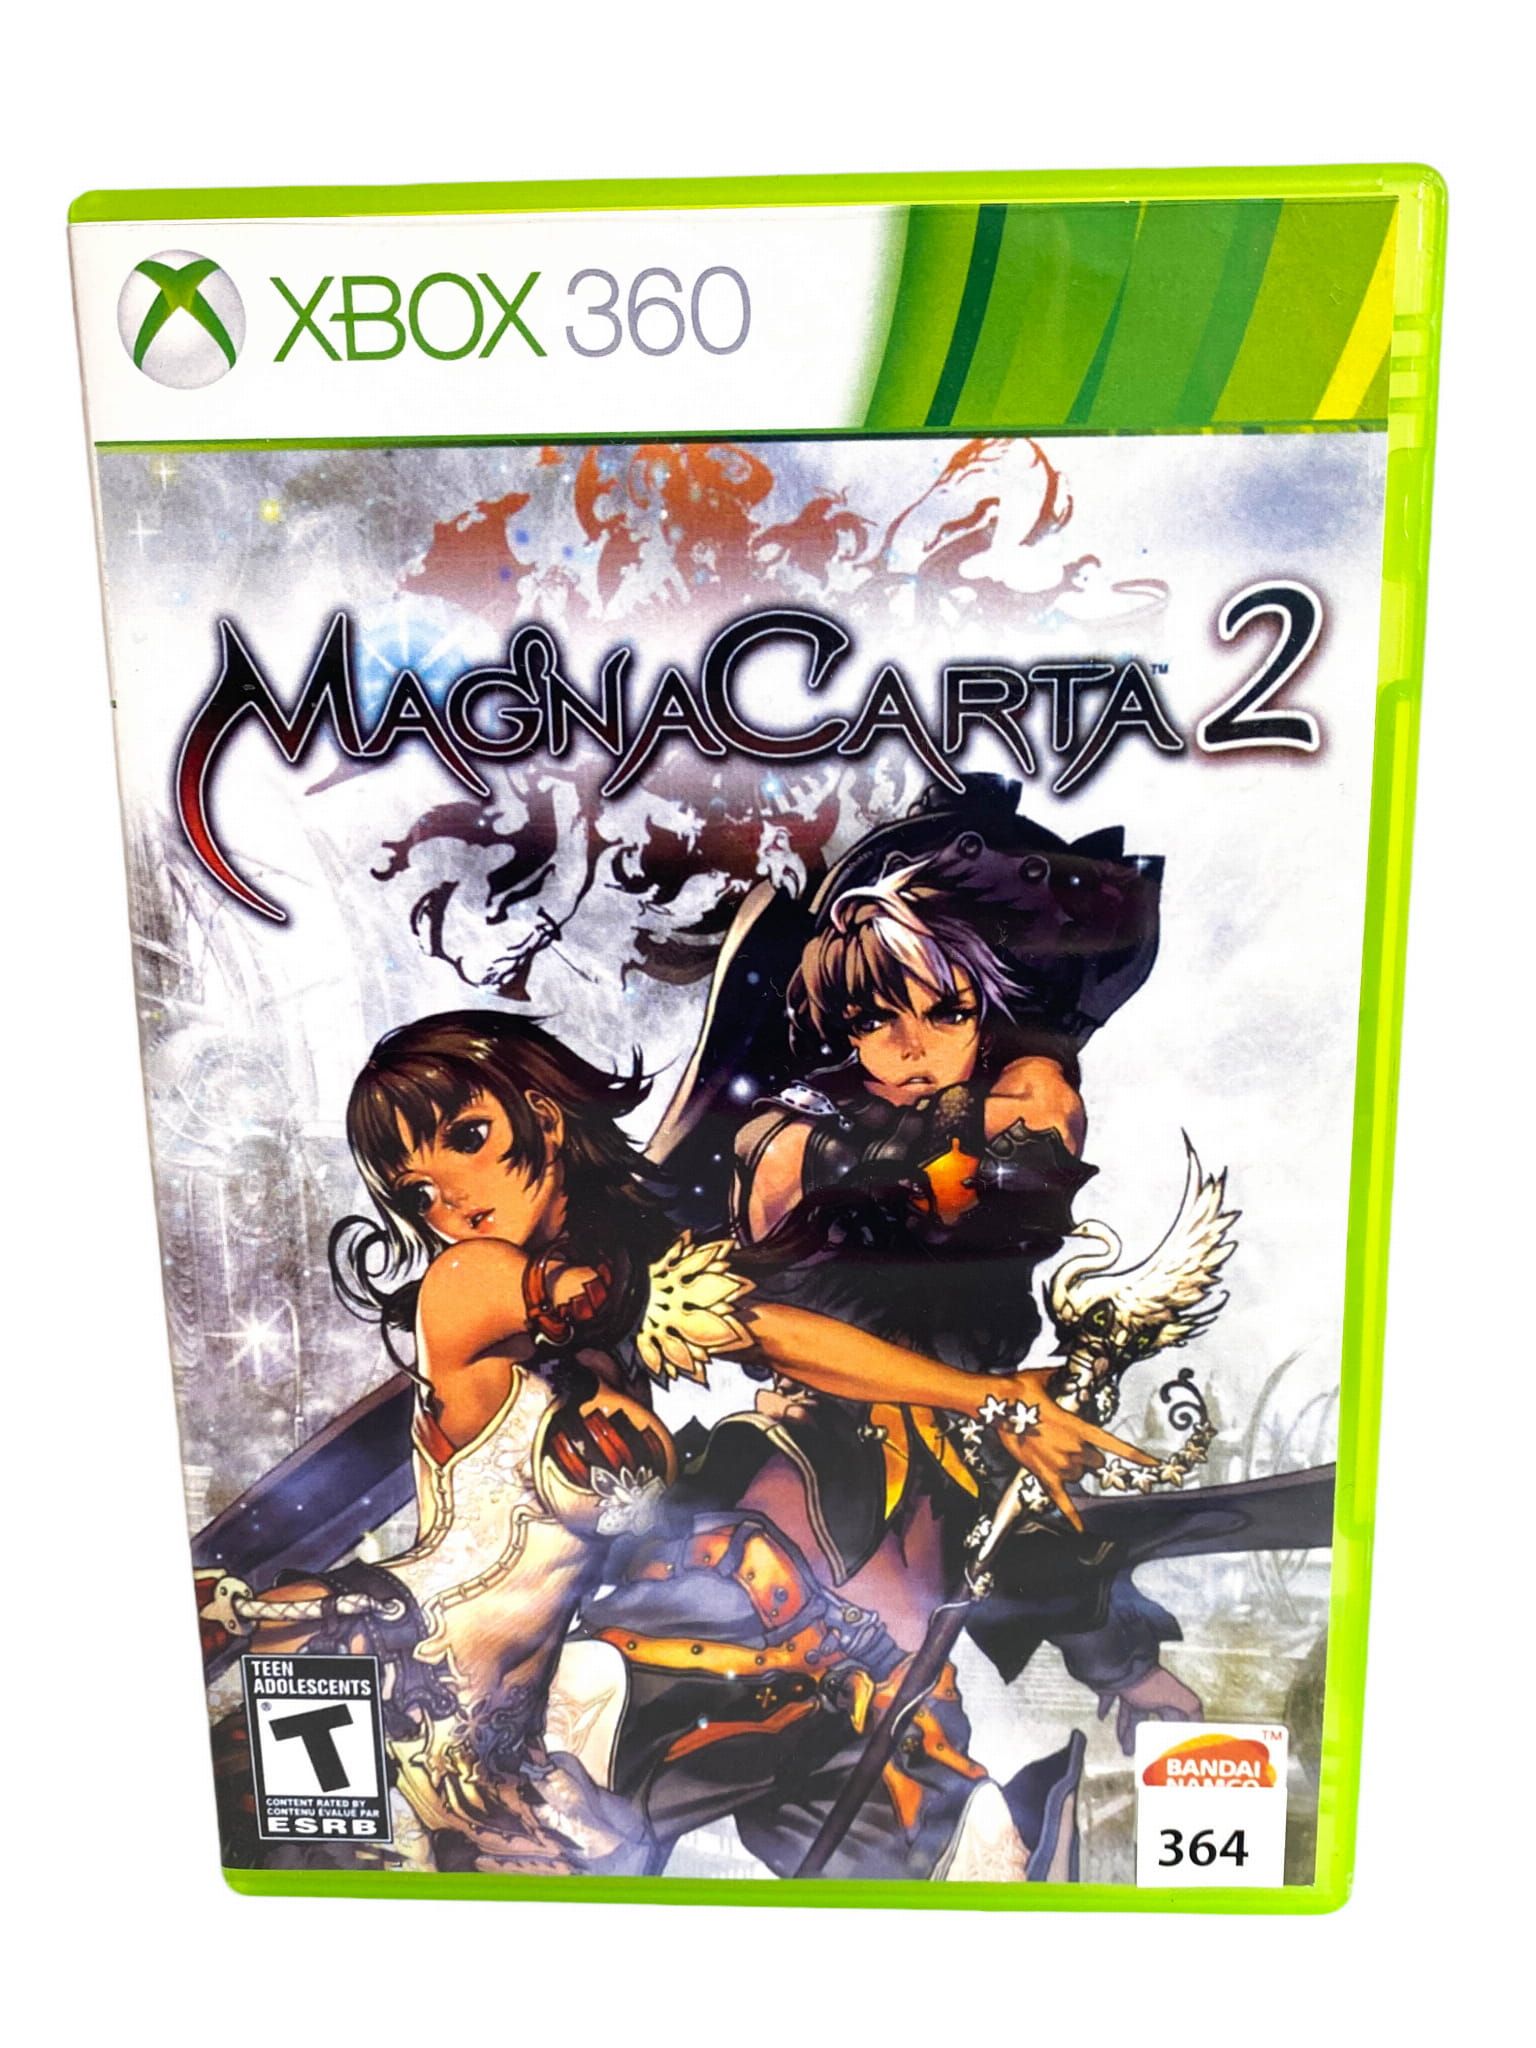 Magna Carta 2 Xbox 360 / 364